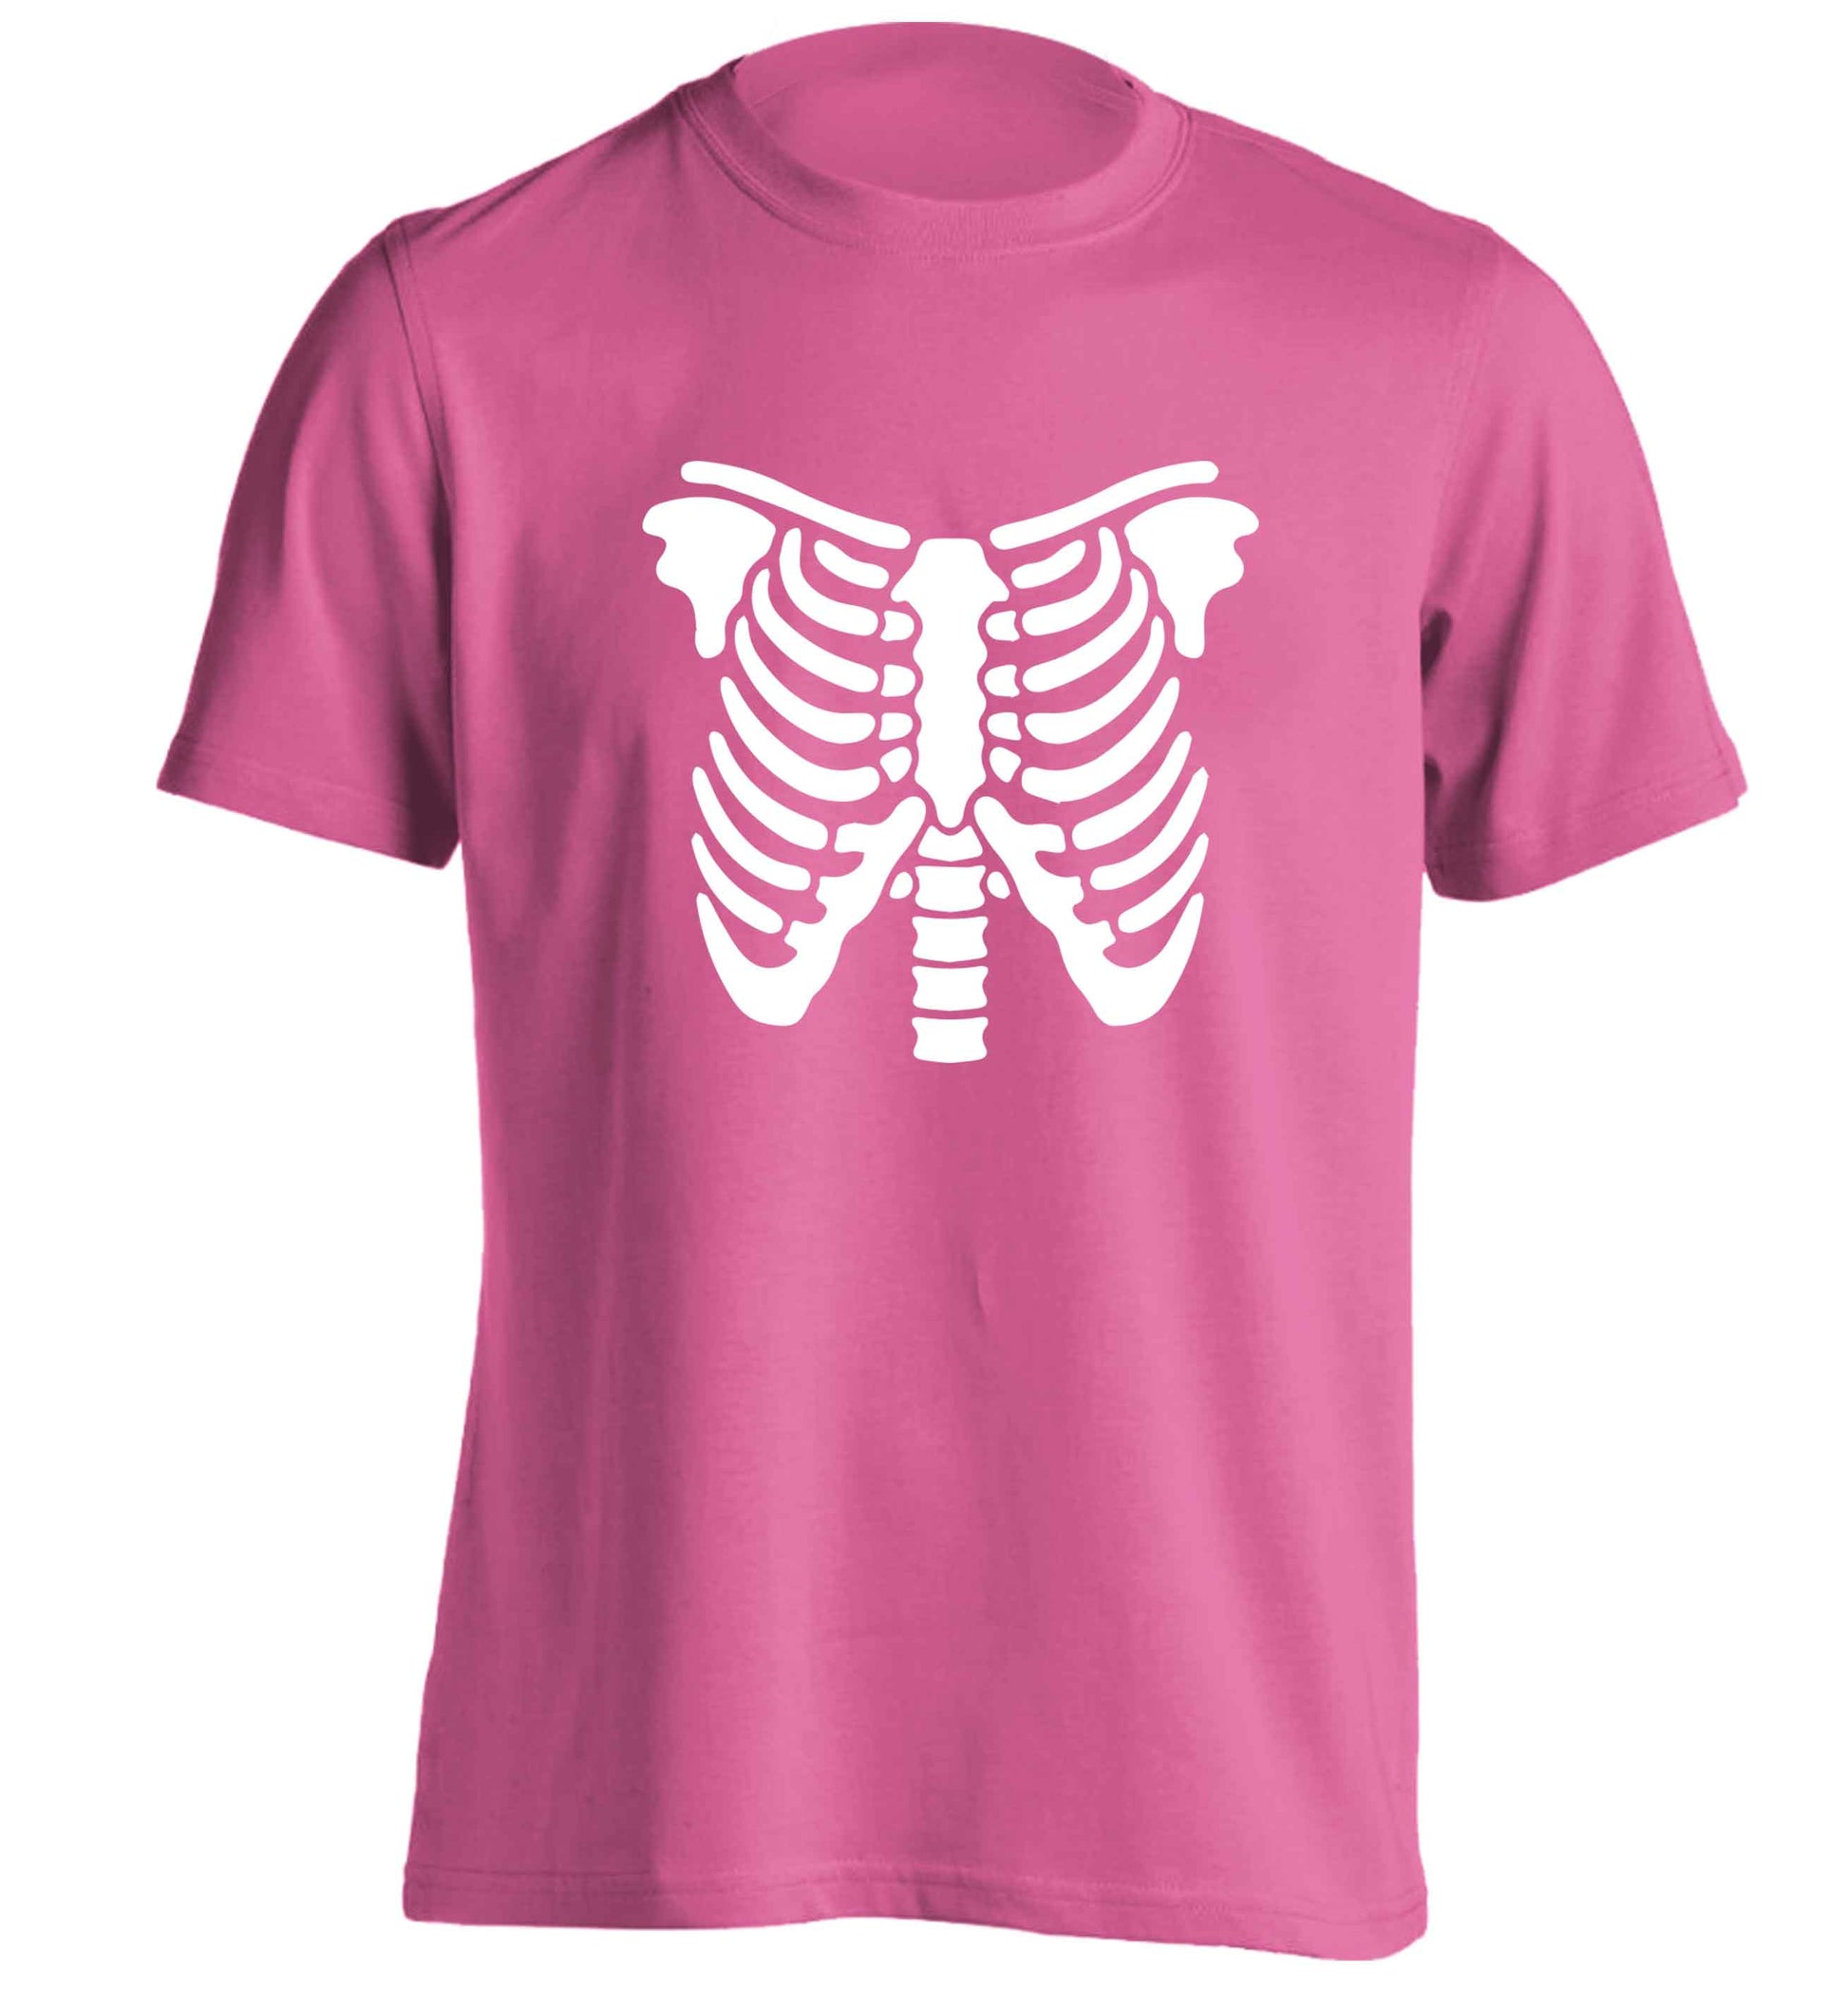 Skeleton ribcage adults unisex pink Tshirt 2XL